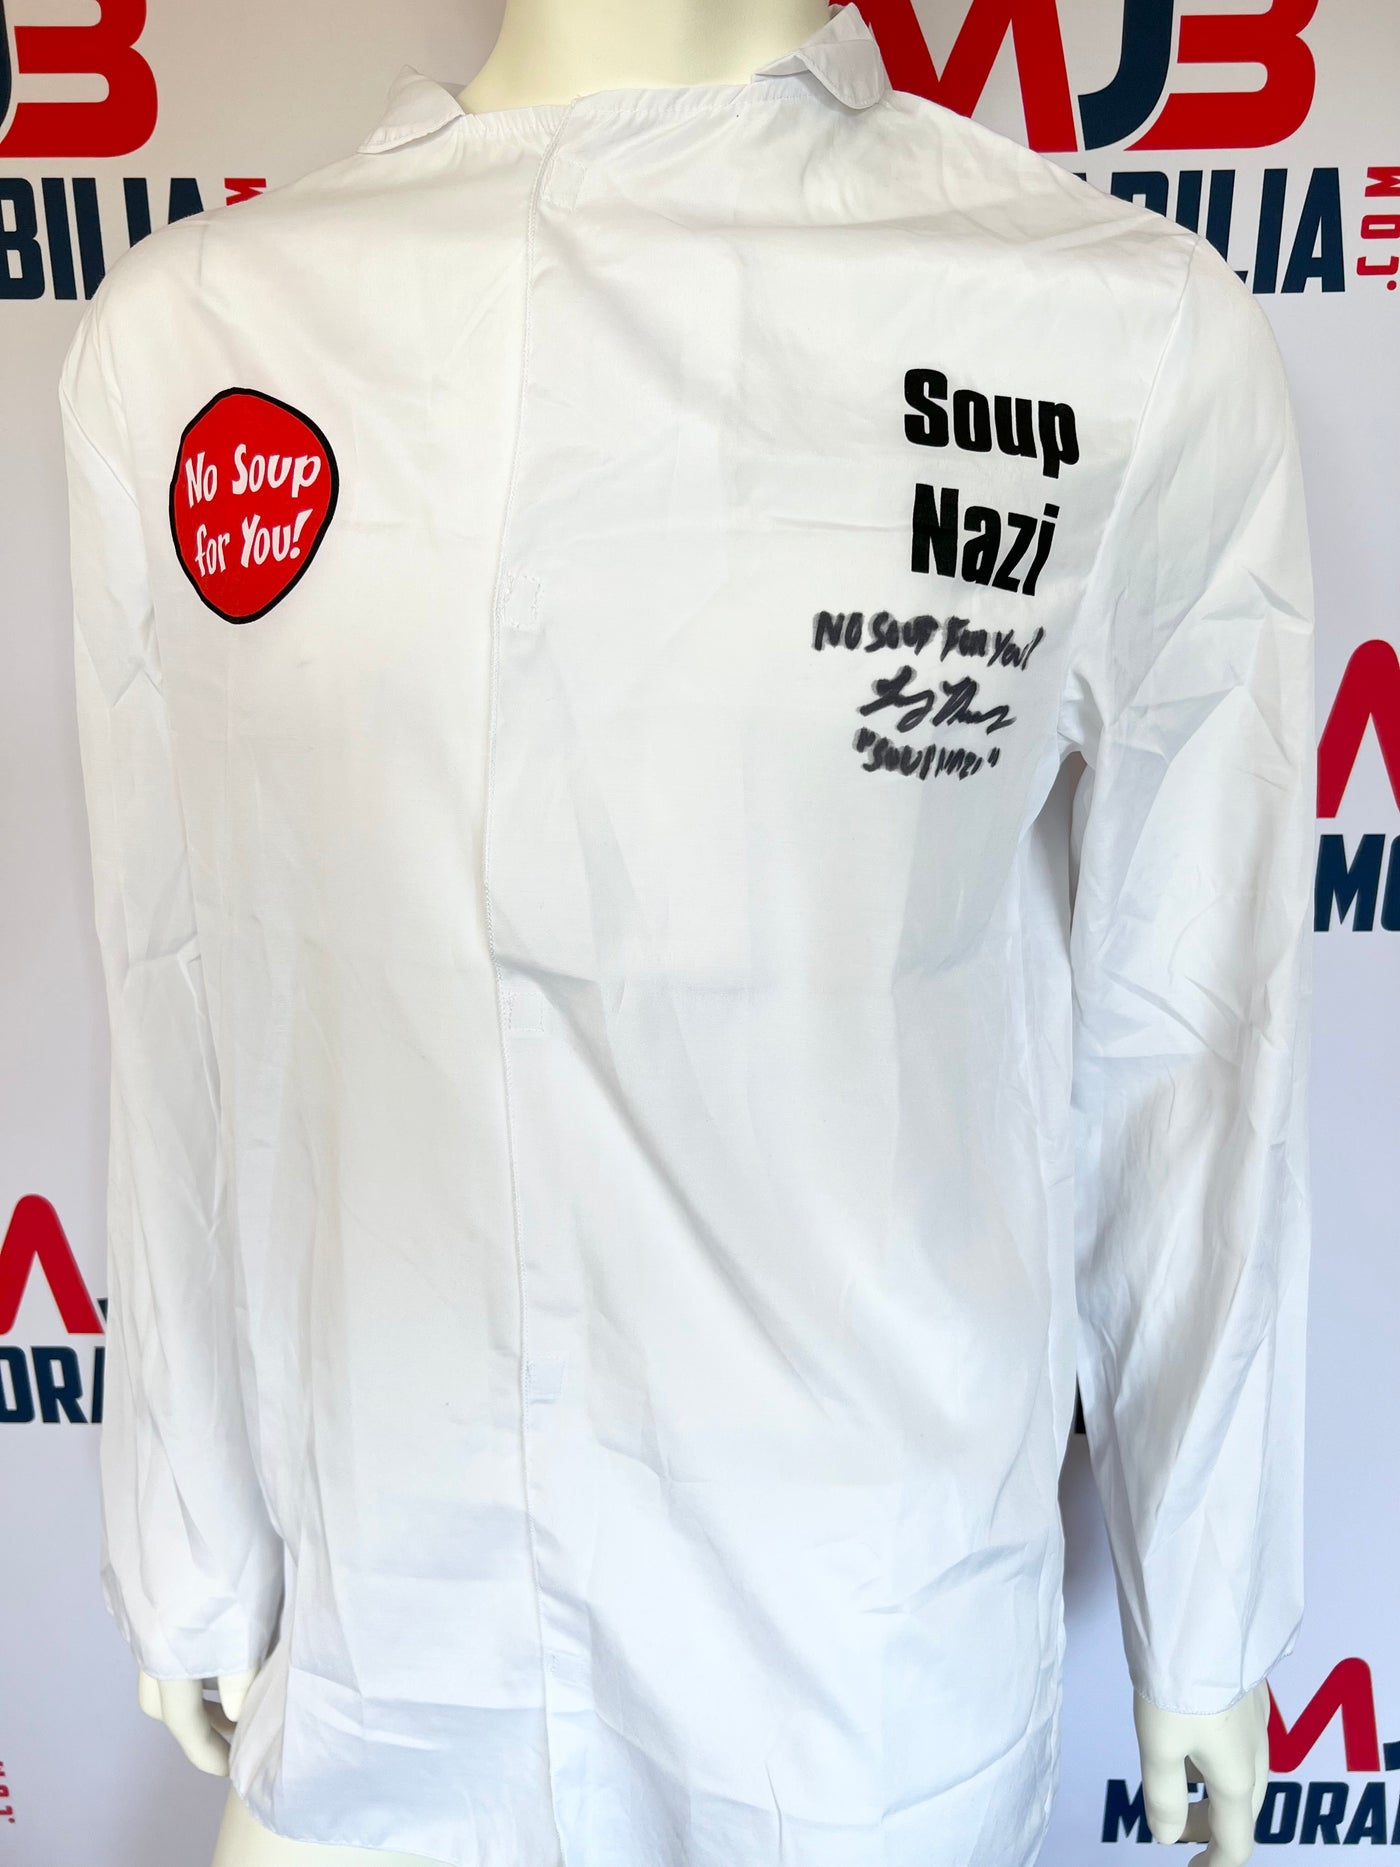 Larry Thomas Signed Seinfeld Chef Shirt Inscribed No Soup for you PSA RARE